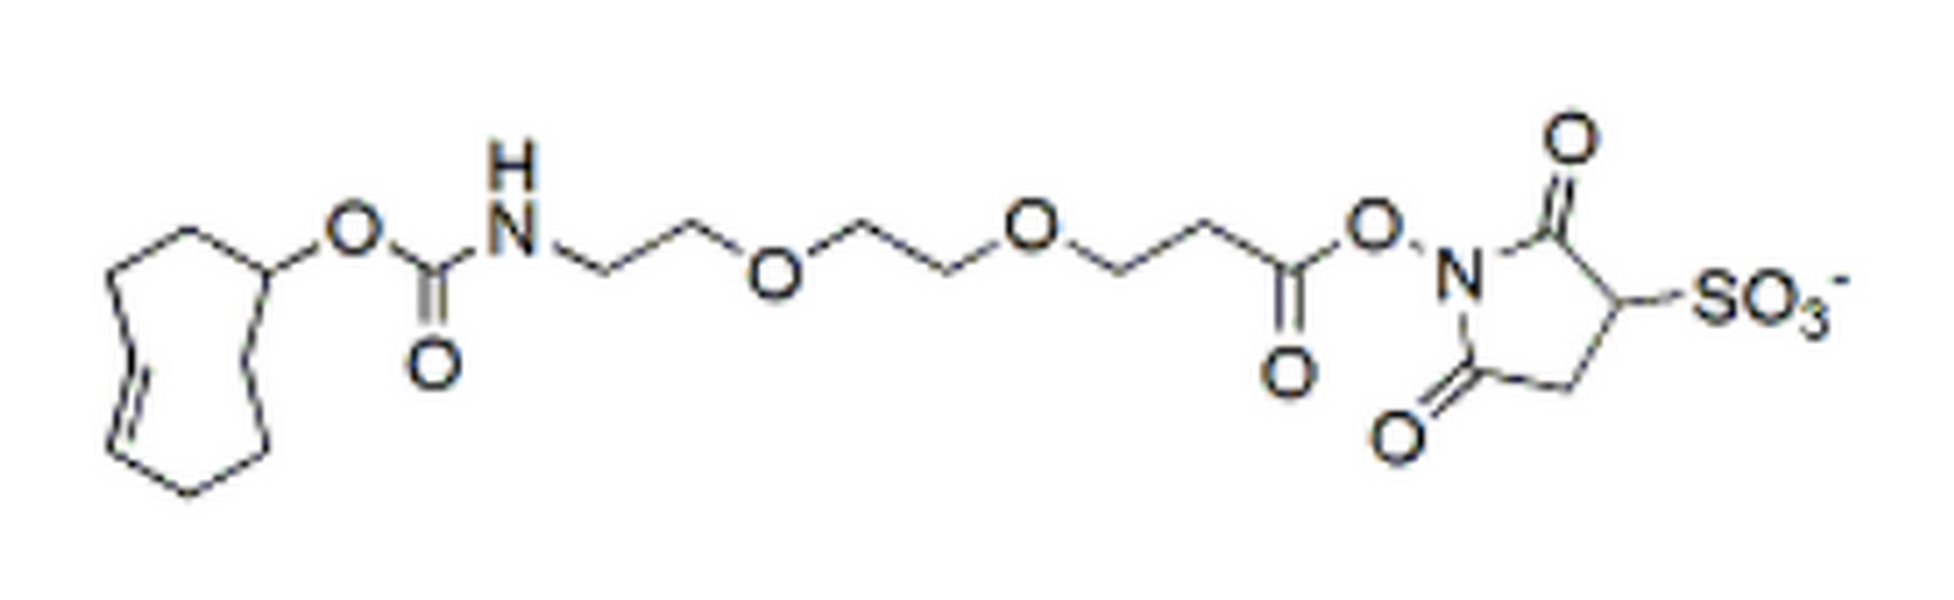 TCO-PEG2-Sulfo-NHS ester